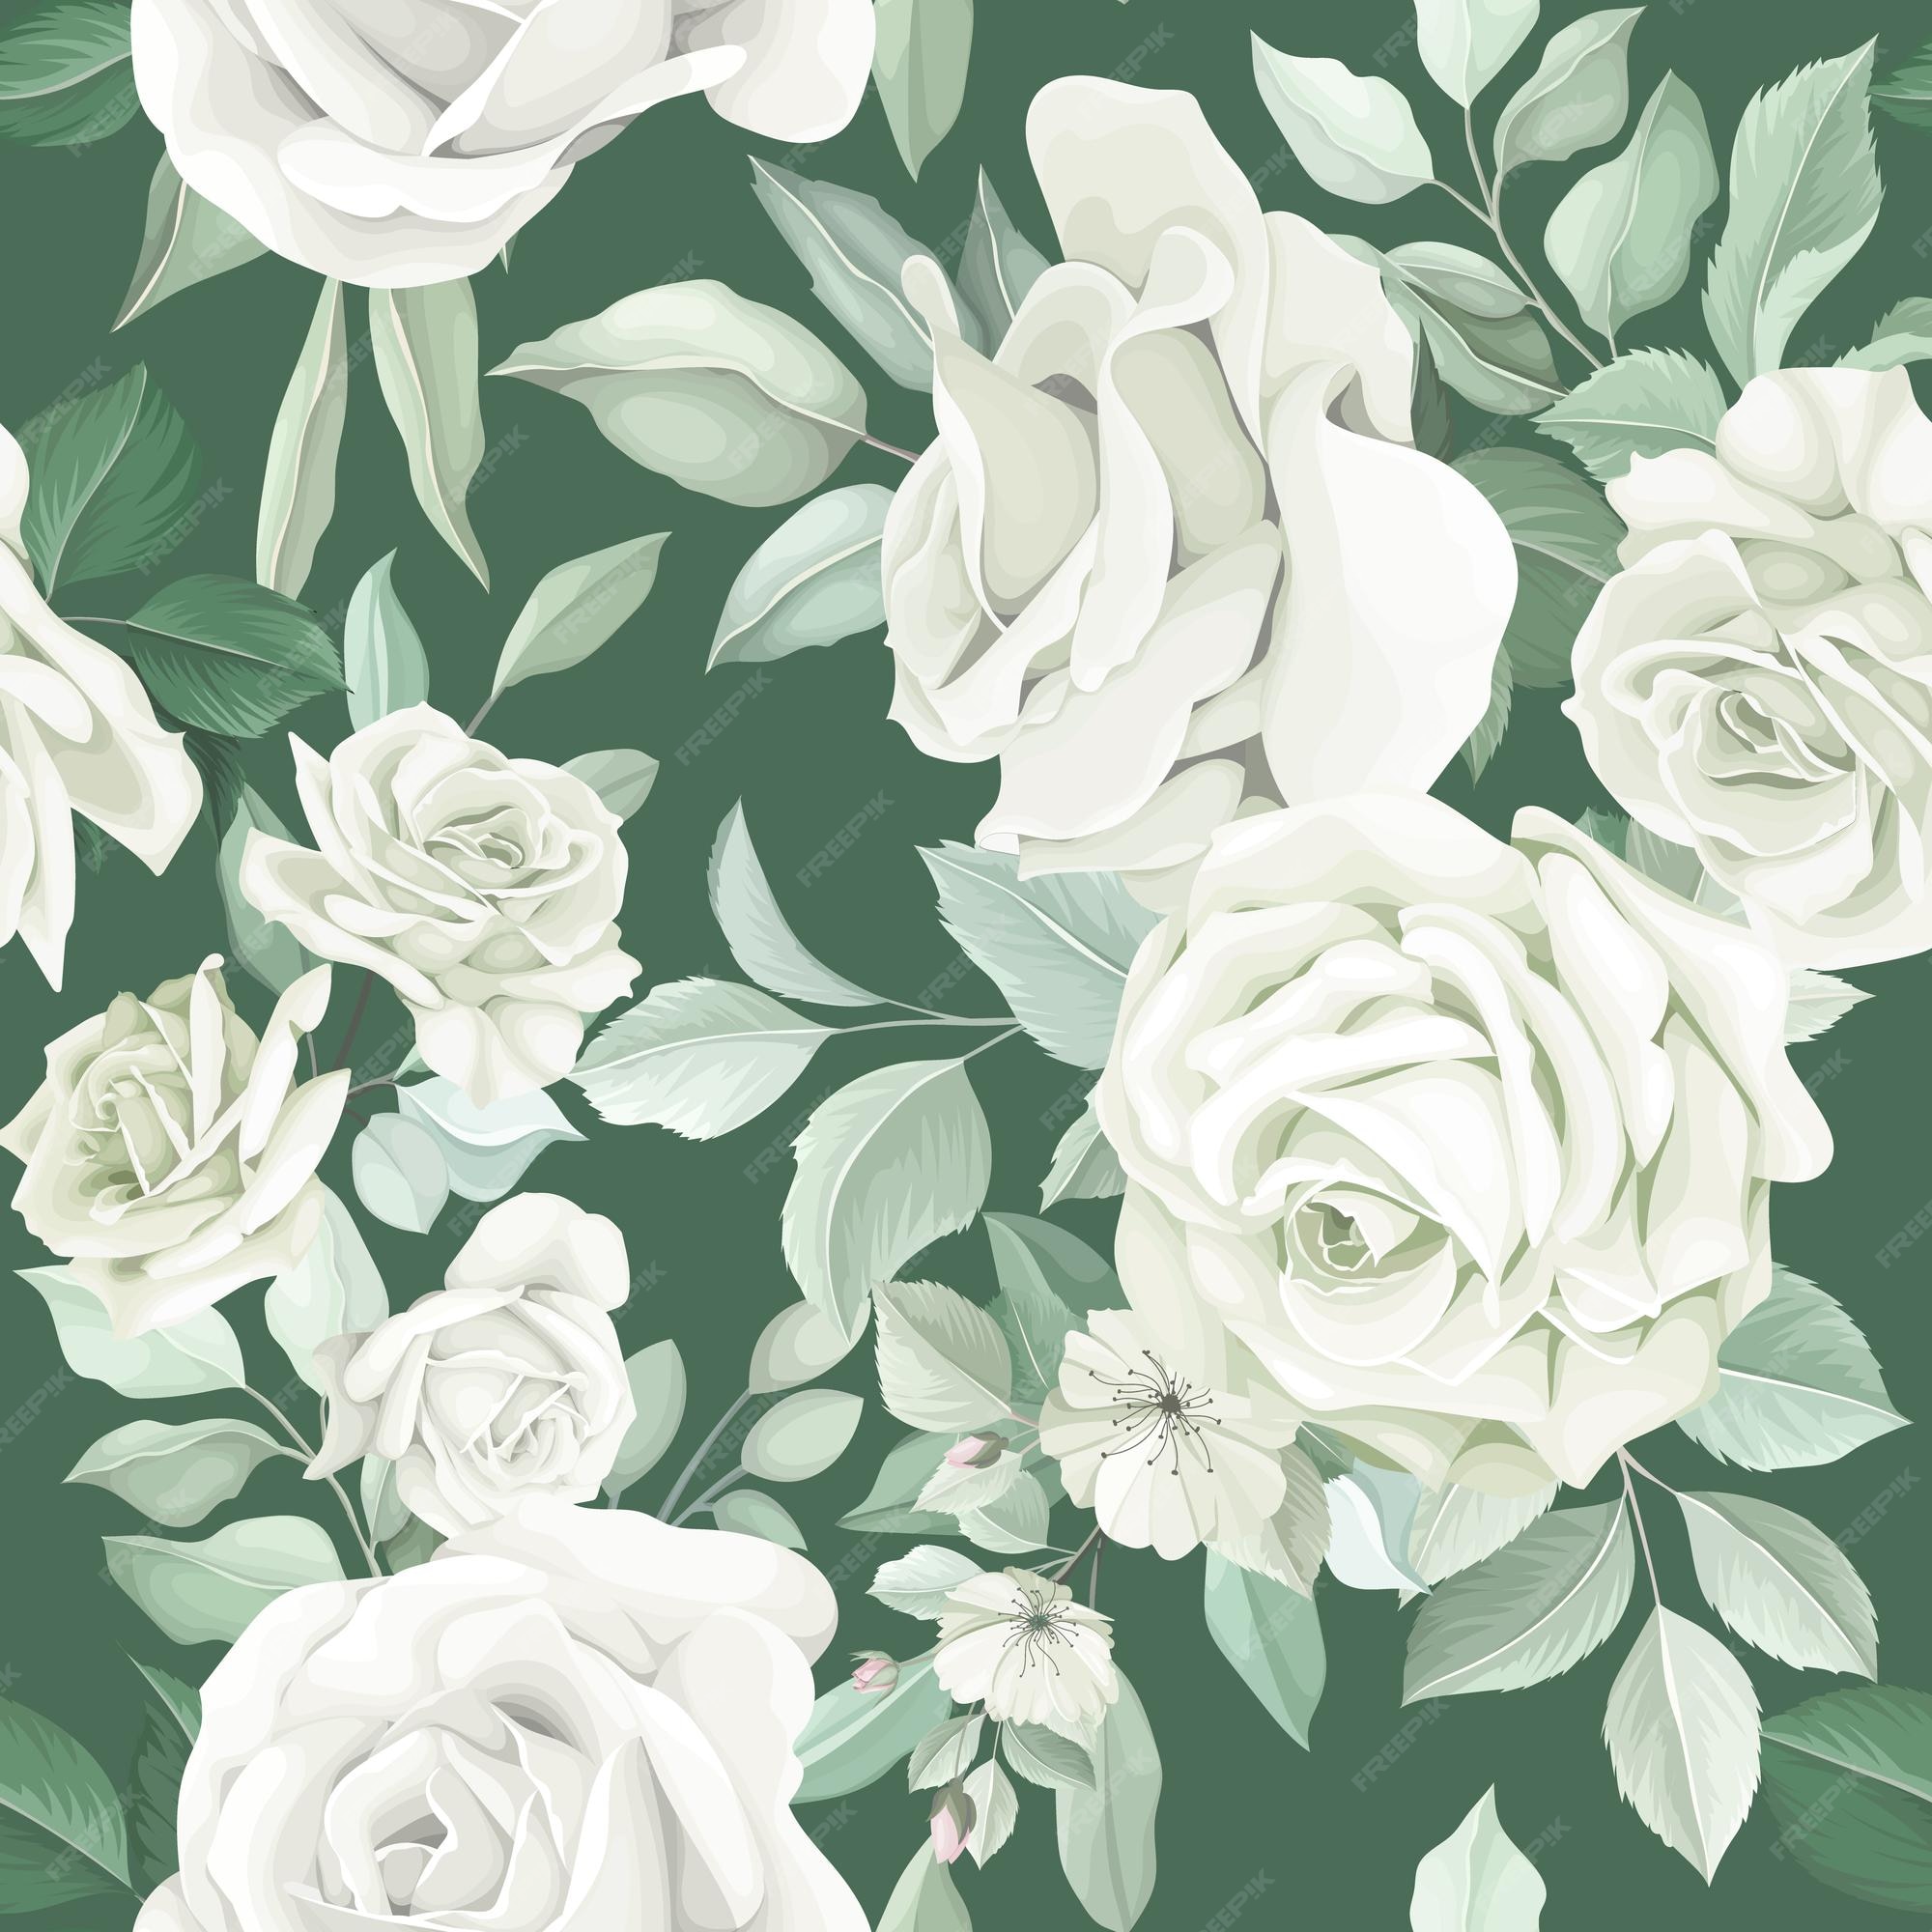 White rose wallpaper Vectors & Illustrations for Free Download | Freepik